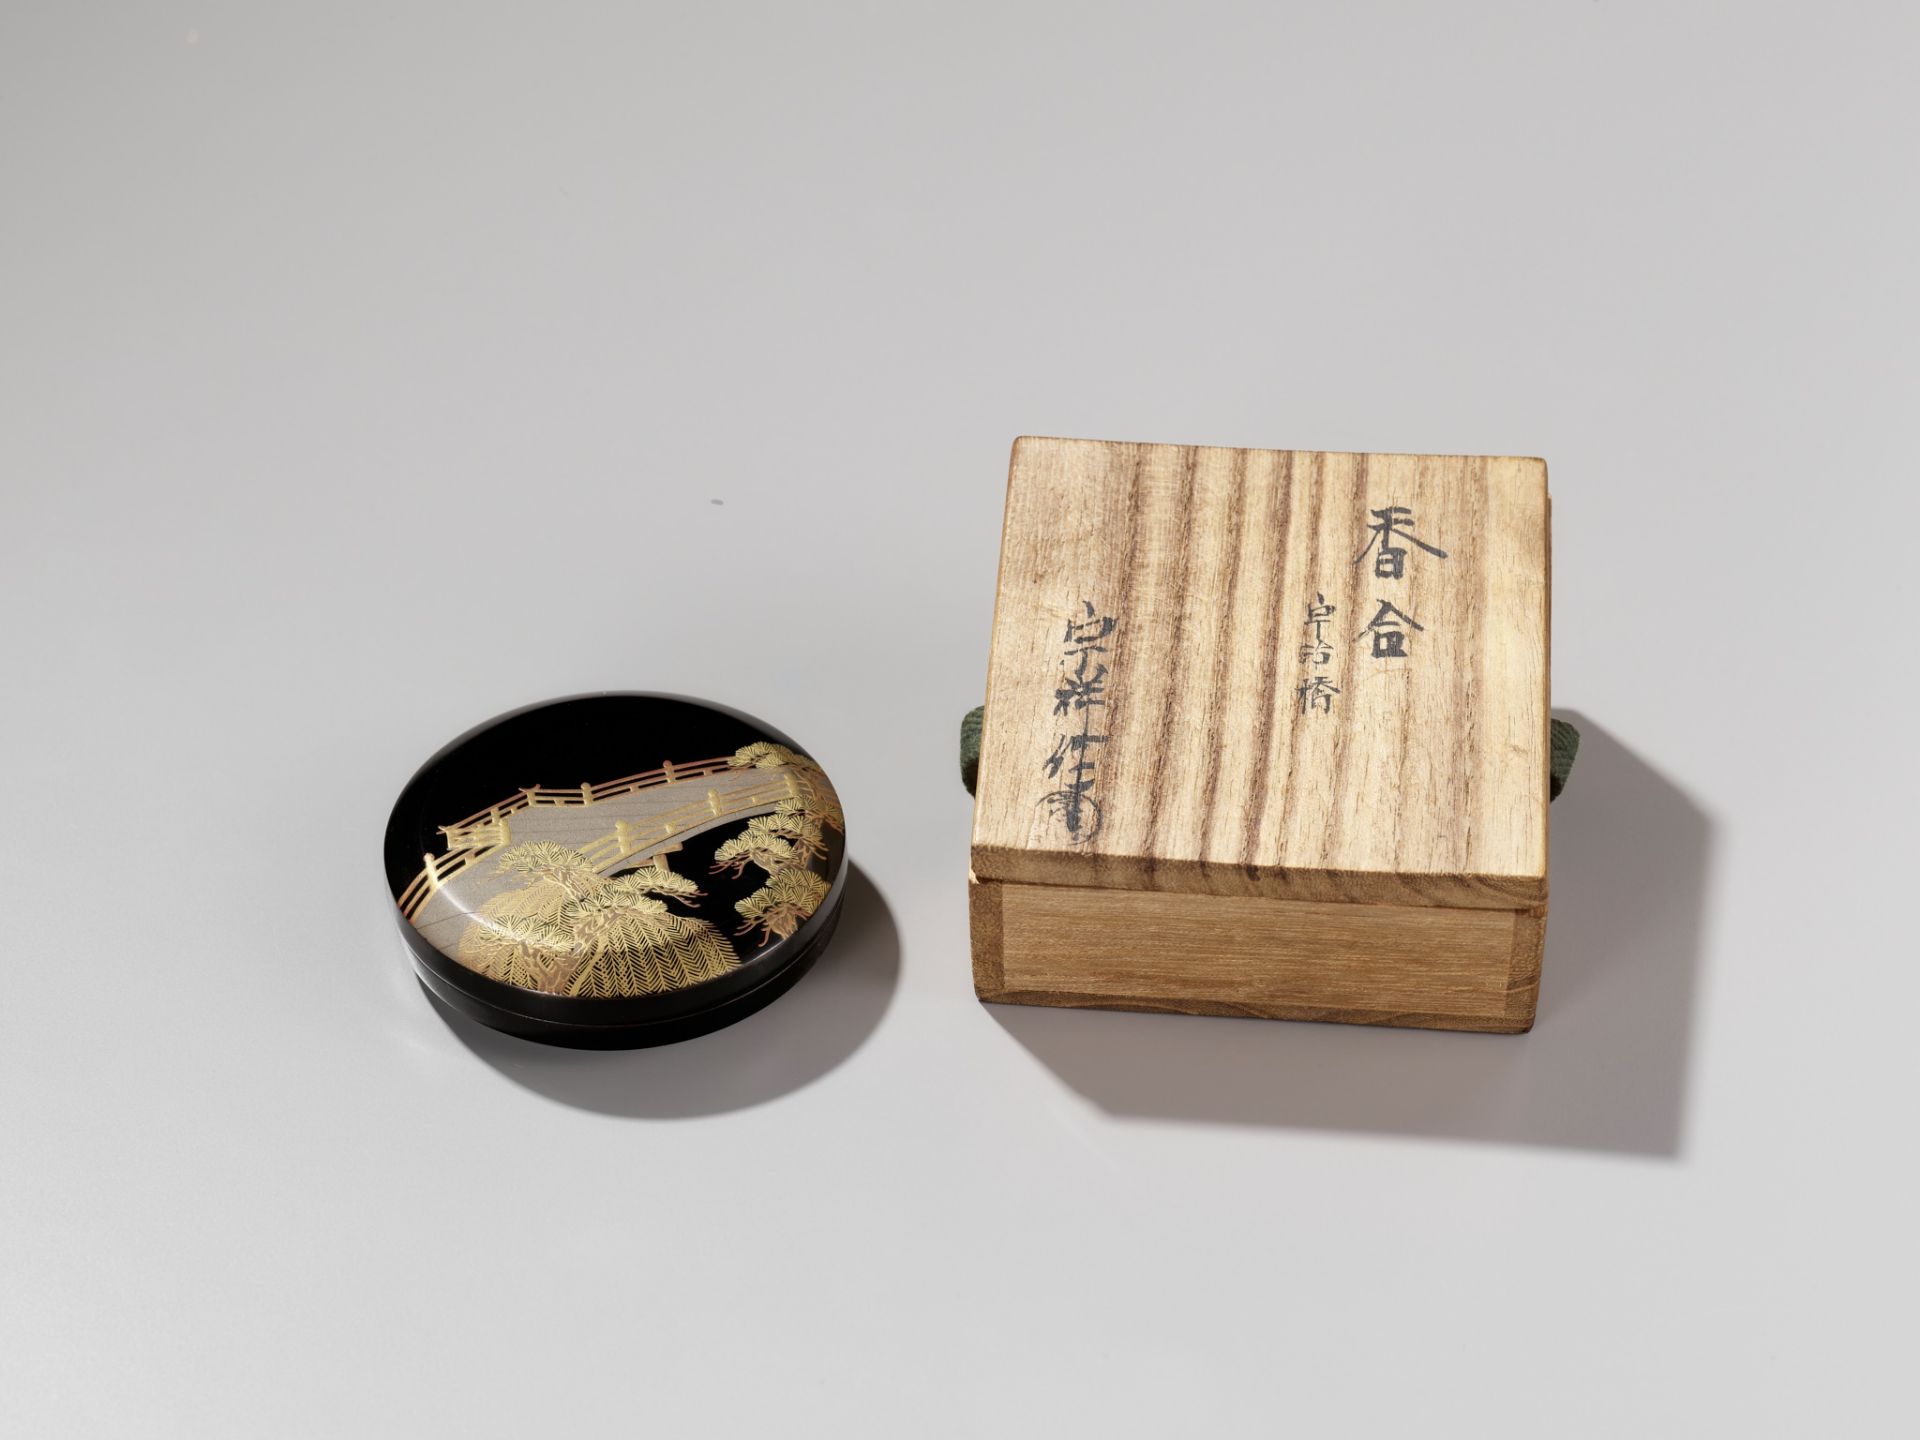 SOSHO: A LACQUER KOGO (INCENSE BOX) AND COVER DEPICTING UJI BRIDGE - Image 10 of 12